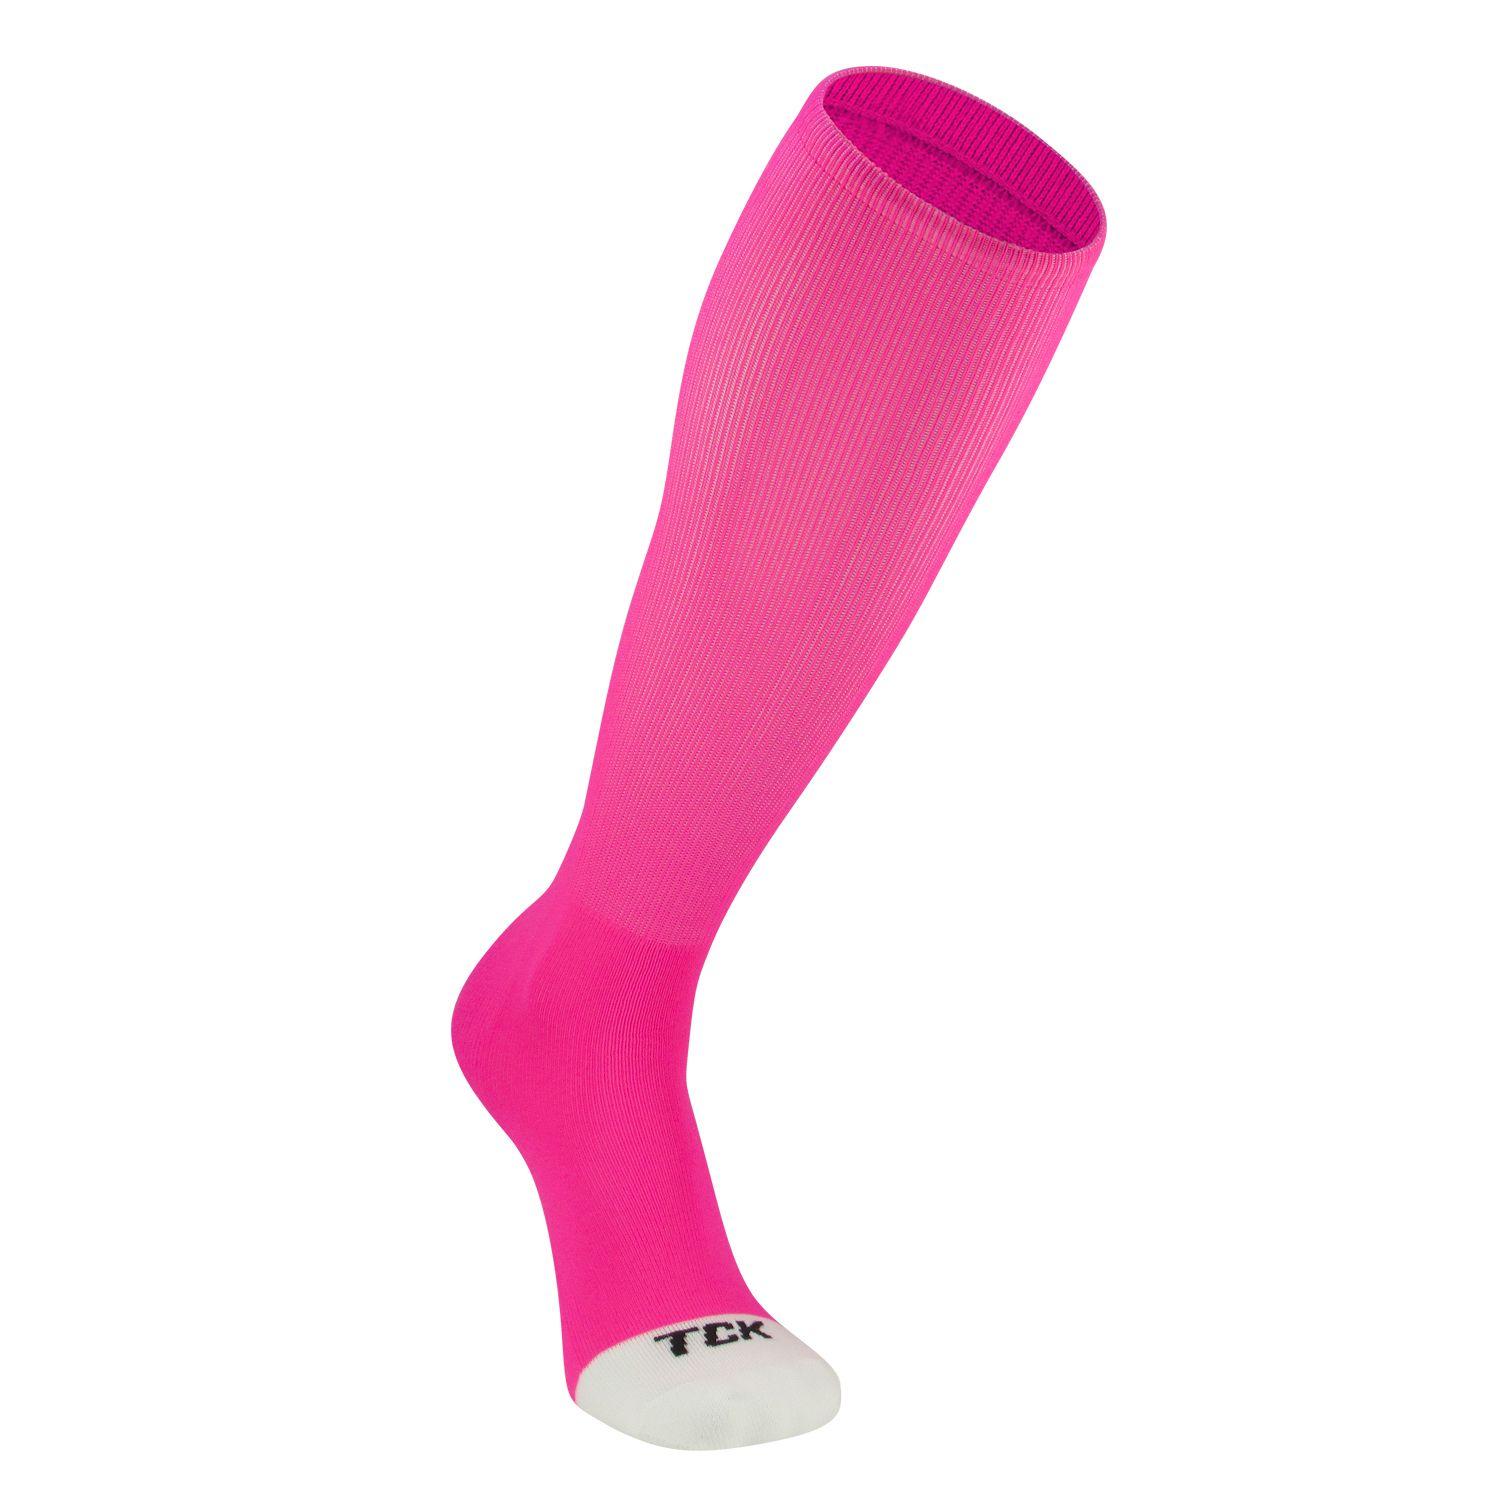 Breast Cancer Awareness Pink Socks Prosport PTWT — TCK